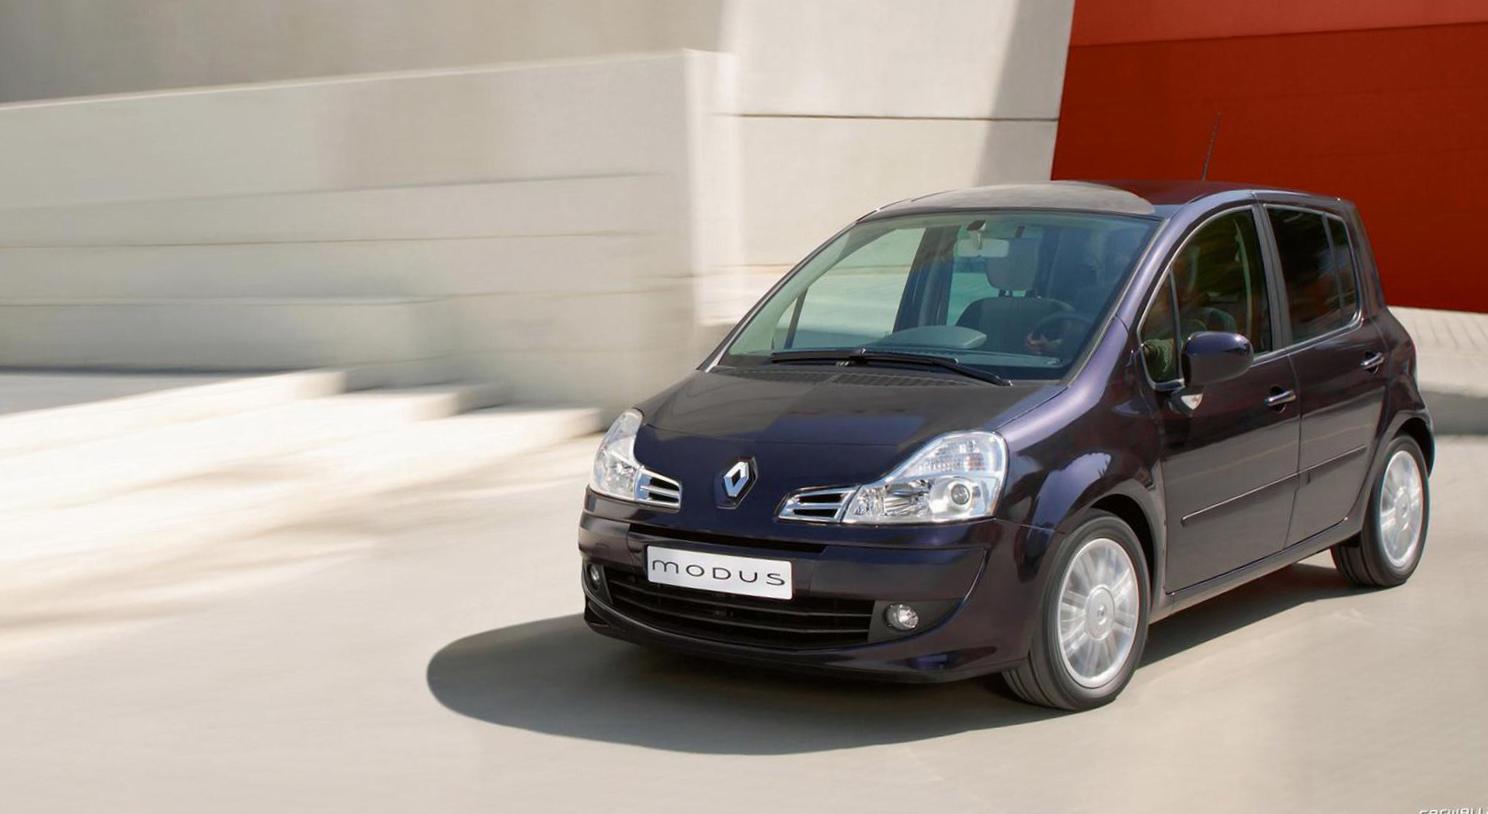 Modus Renault price 2012